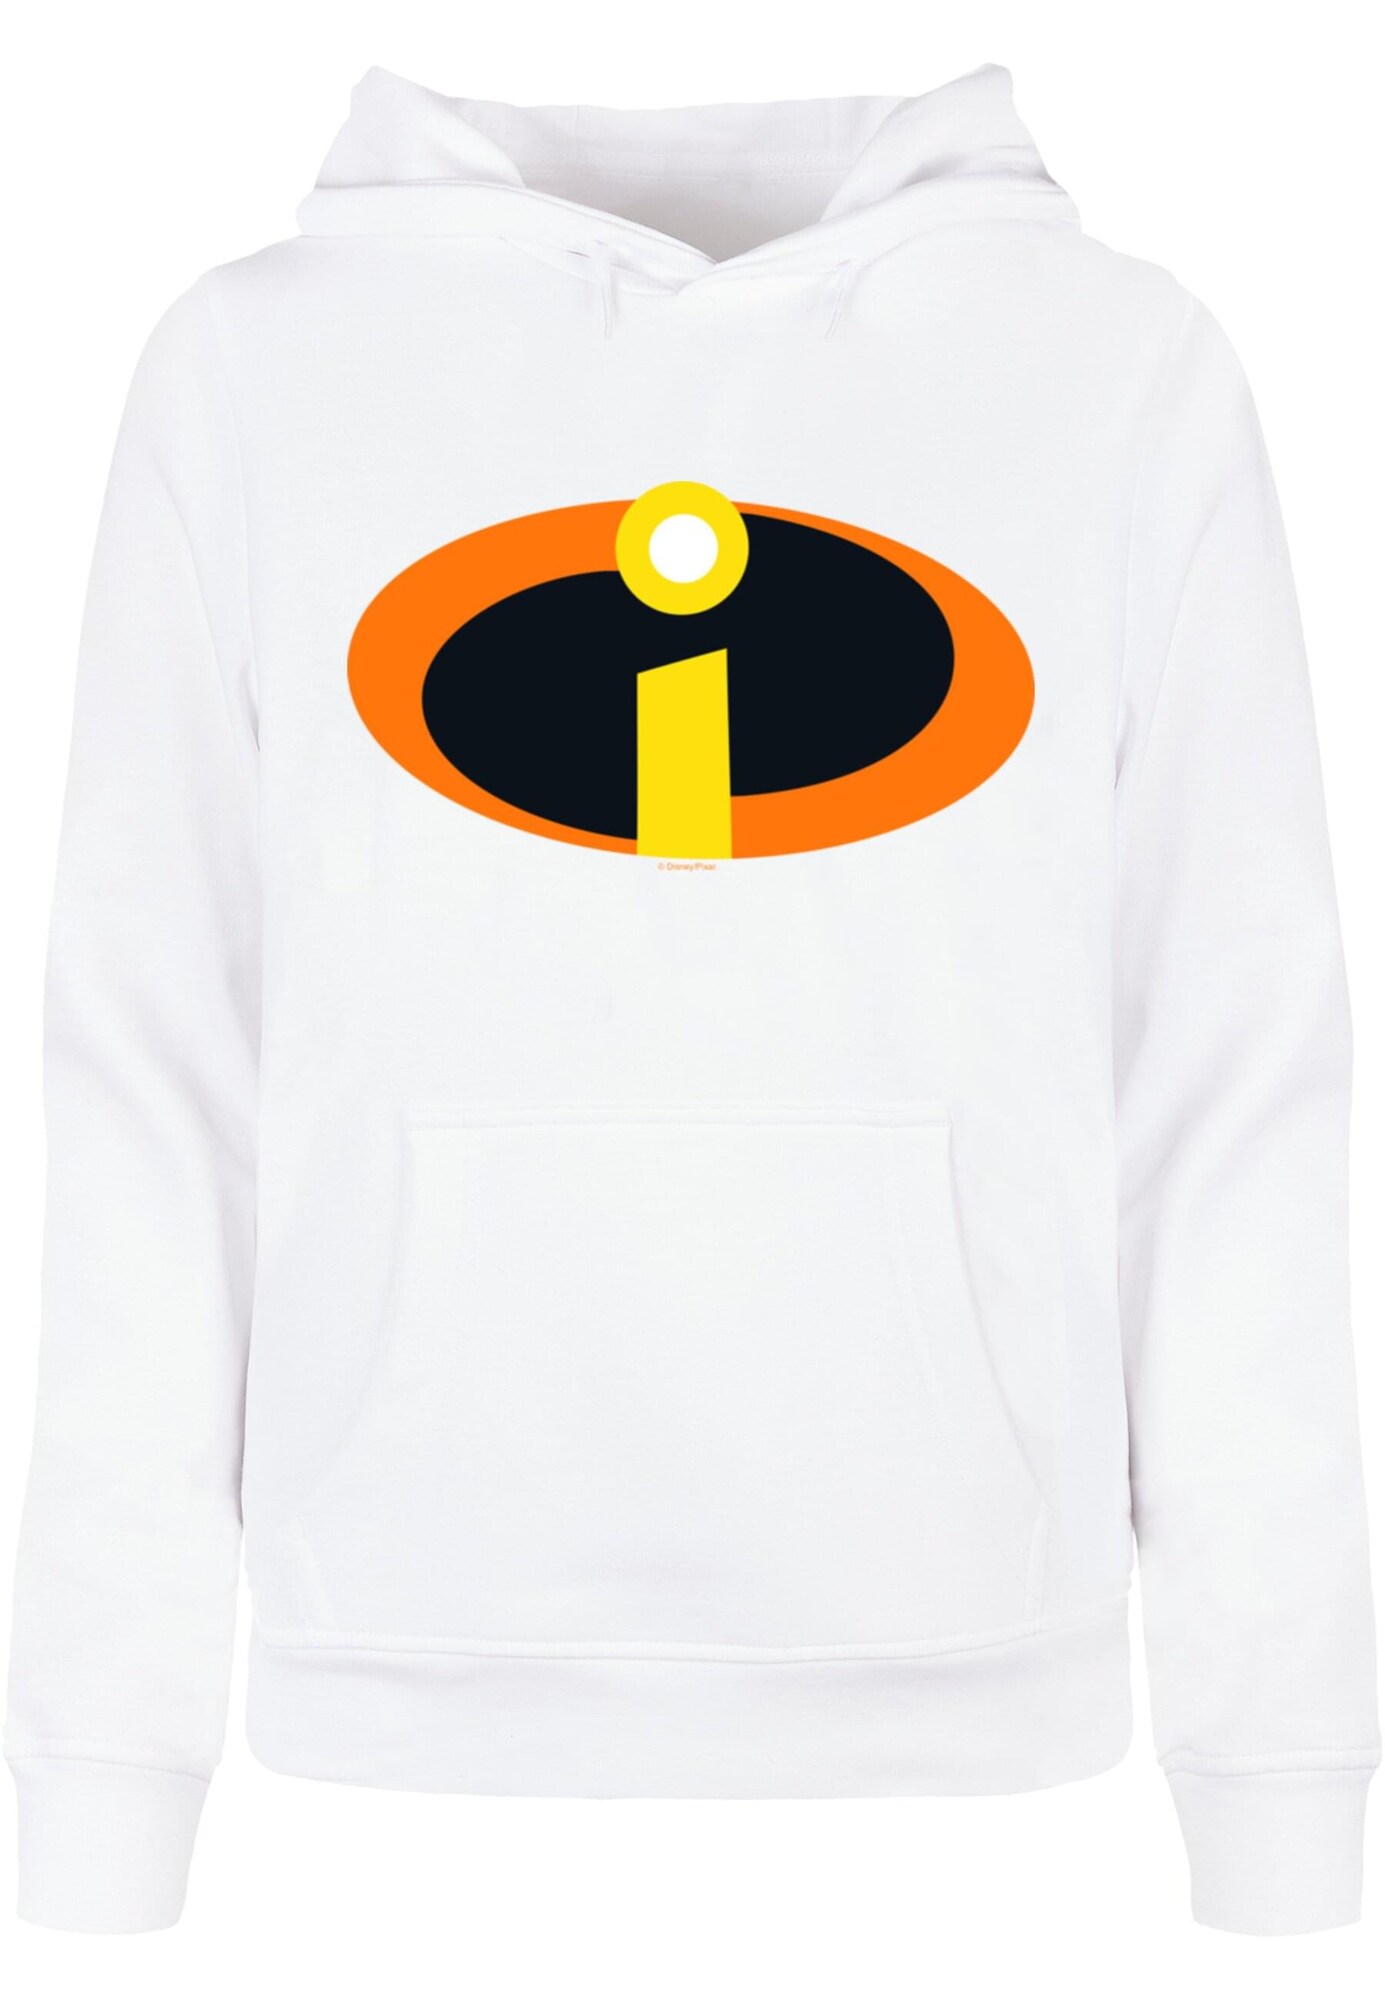 ABSOLUTE CULT Sweat-shirt 'The Incredibles 2 - Costume' jaune / orange / noir / blanc-ABSOLUTE CULT 1